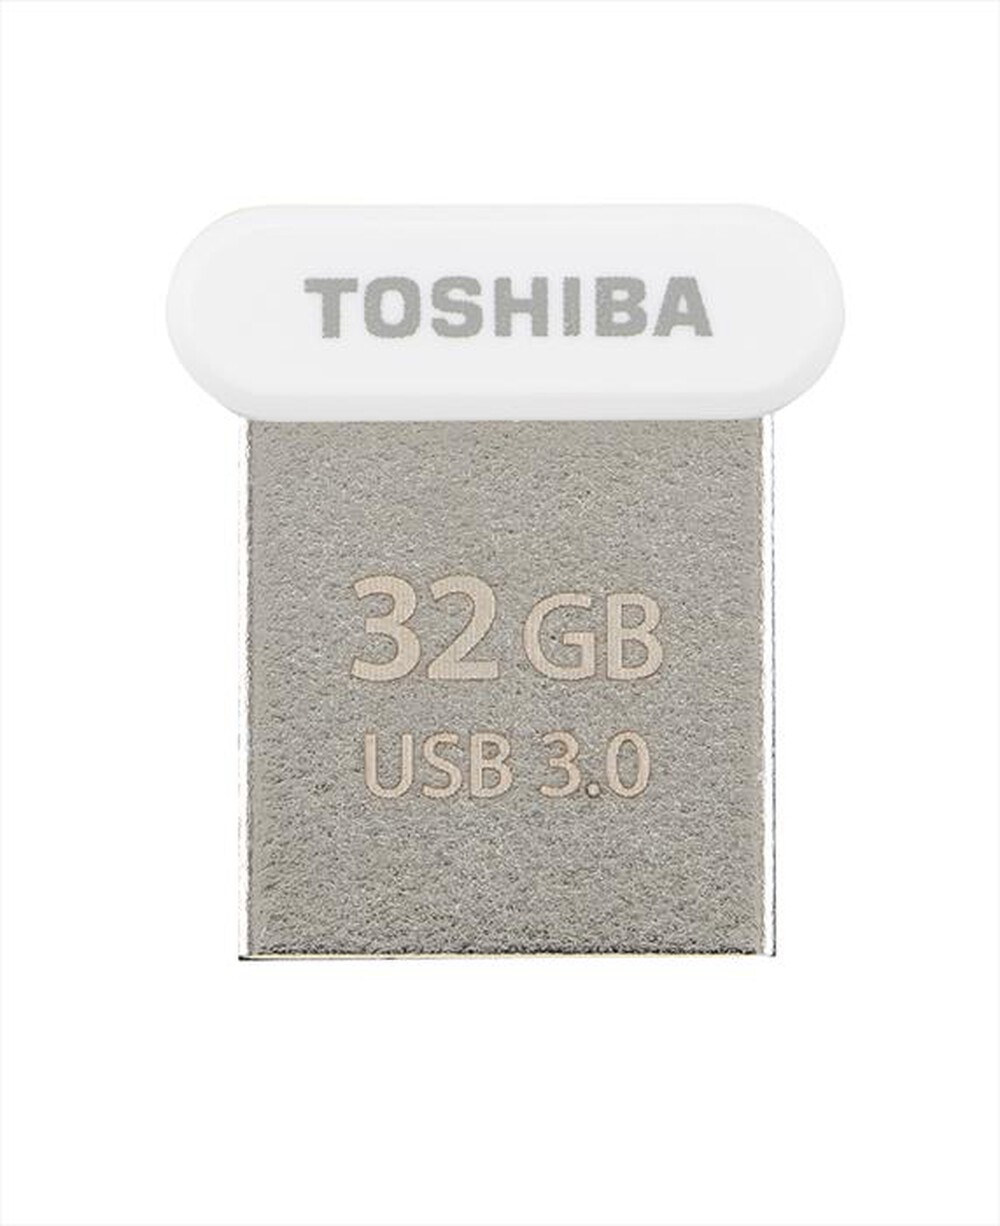 "TOSHIBA - CHIAVE USB 32GB + RICEVITORE DVB T2 618UHD ESTAR-BIANCO E NERO"